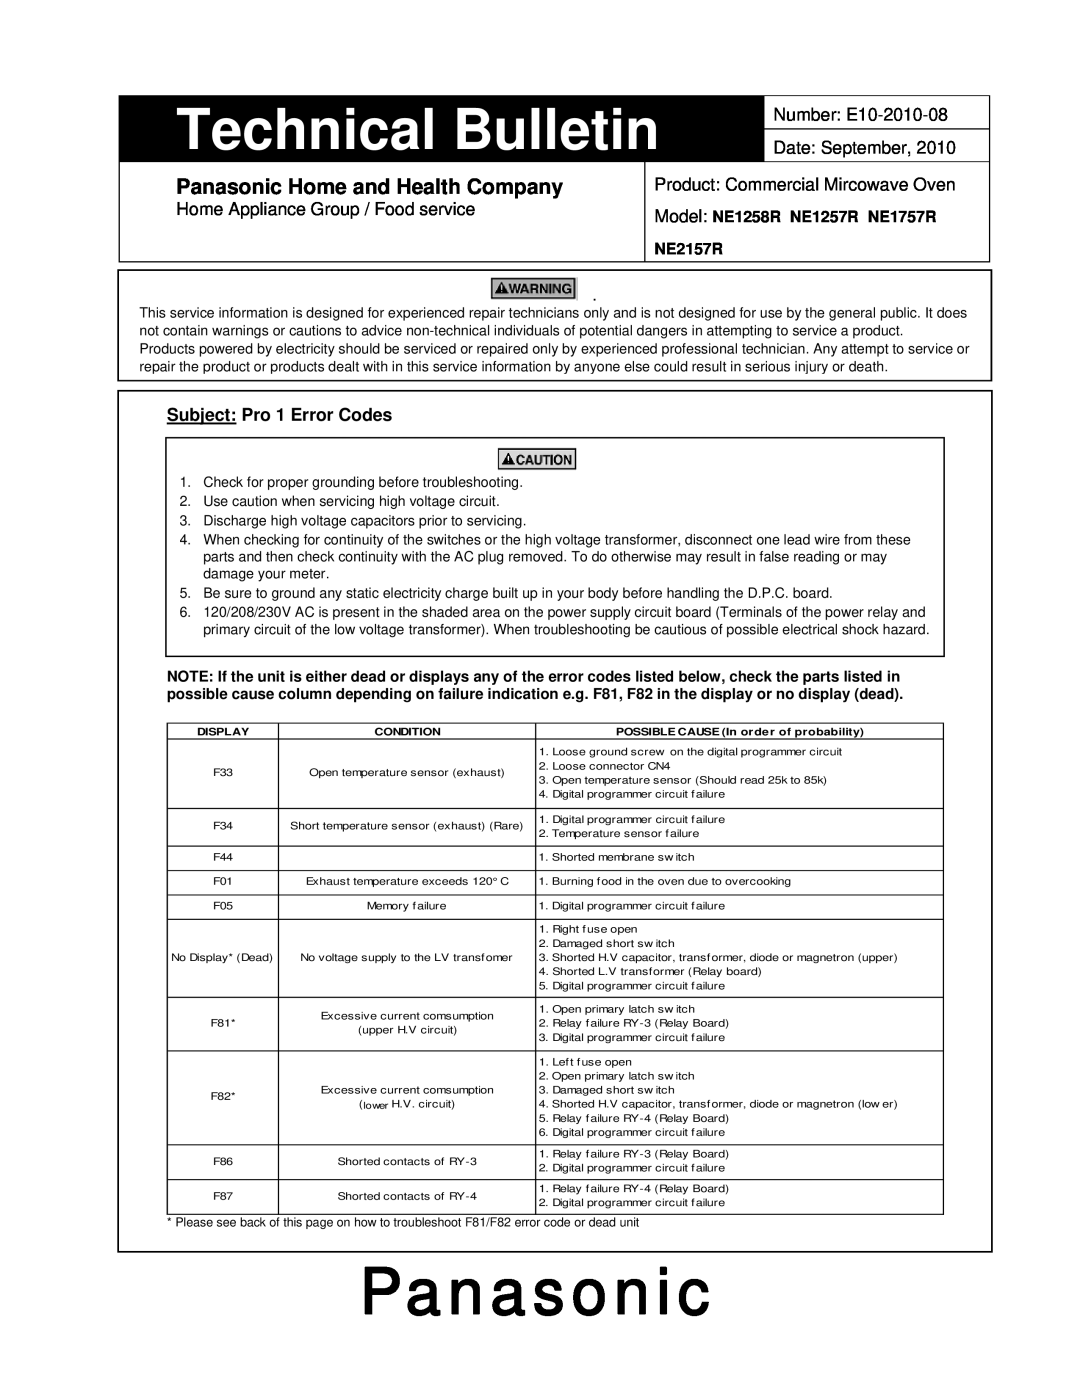 Panasonic NE1757R manual Technical Bulletin, Panasonic Home and Health Company, Number E10-2010-08 Date September 